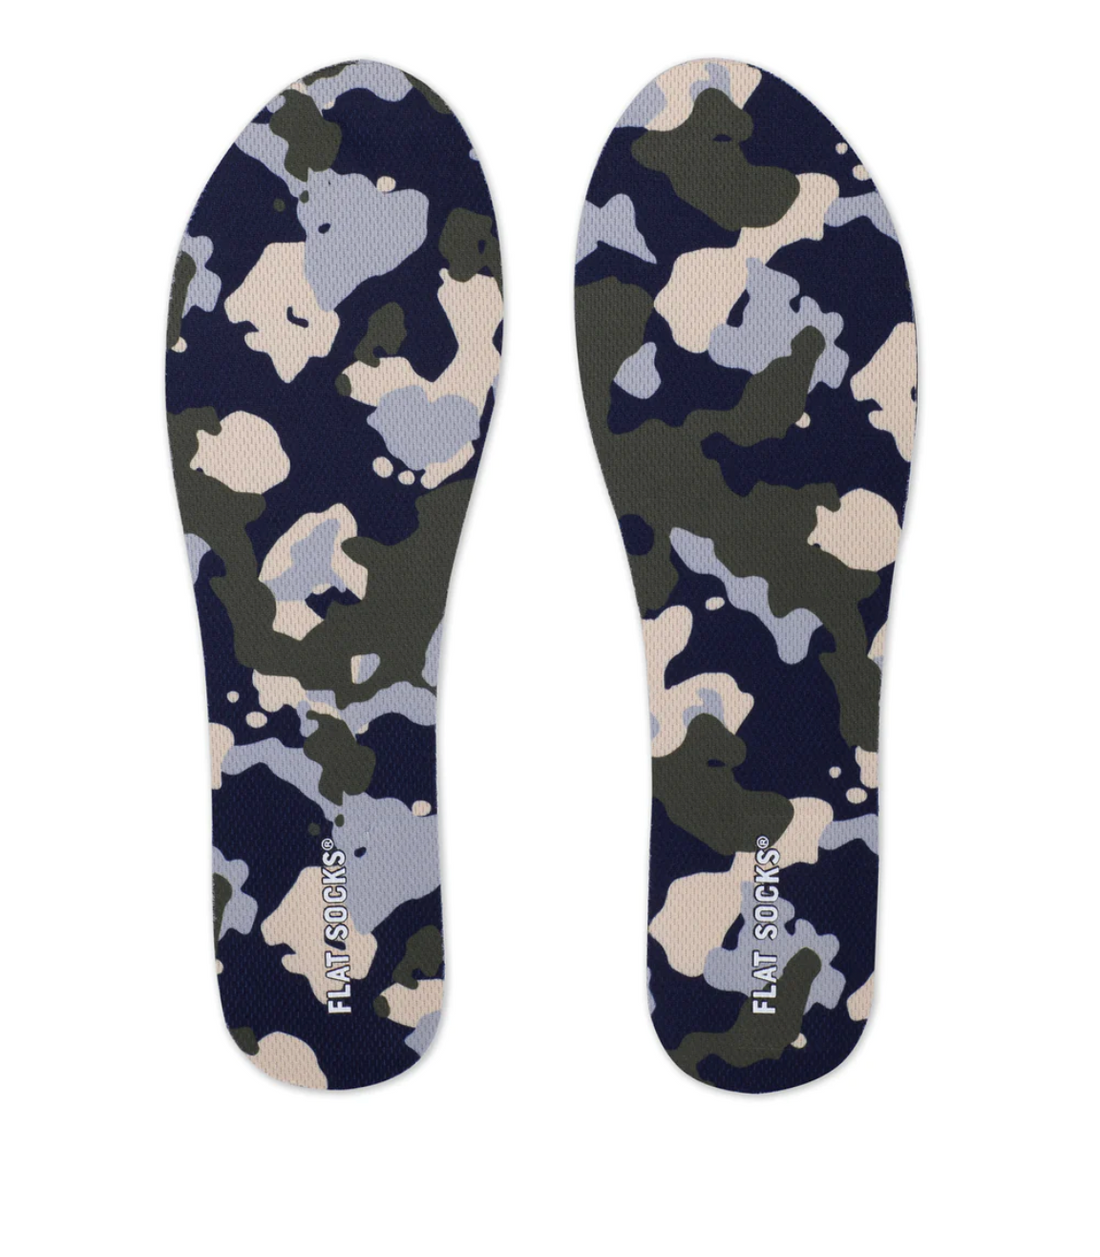 Flat Socks -  Military Camo - SMALL